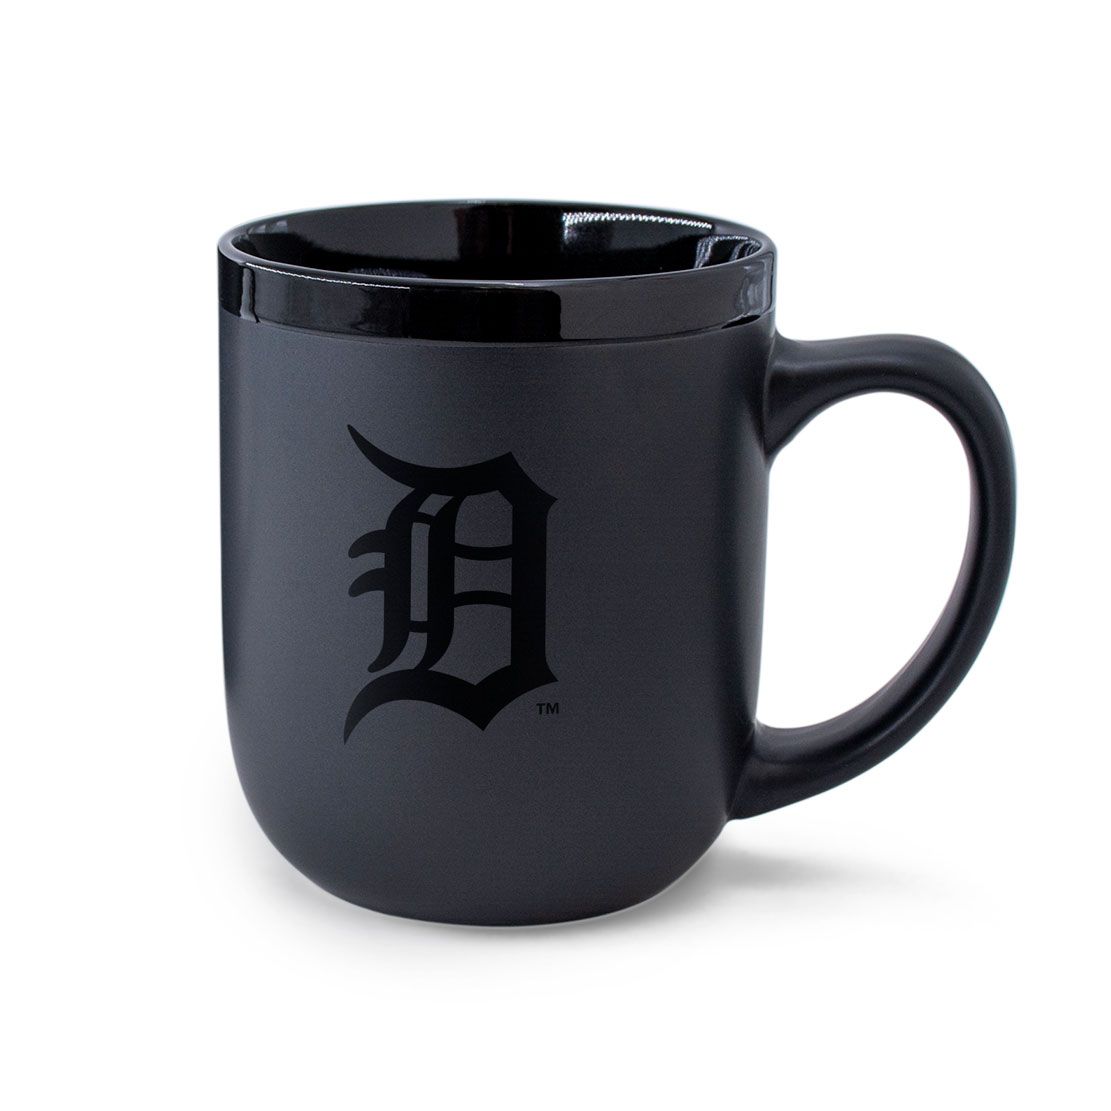 Detroit Tigers Ceramic Mug 17 oz